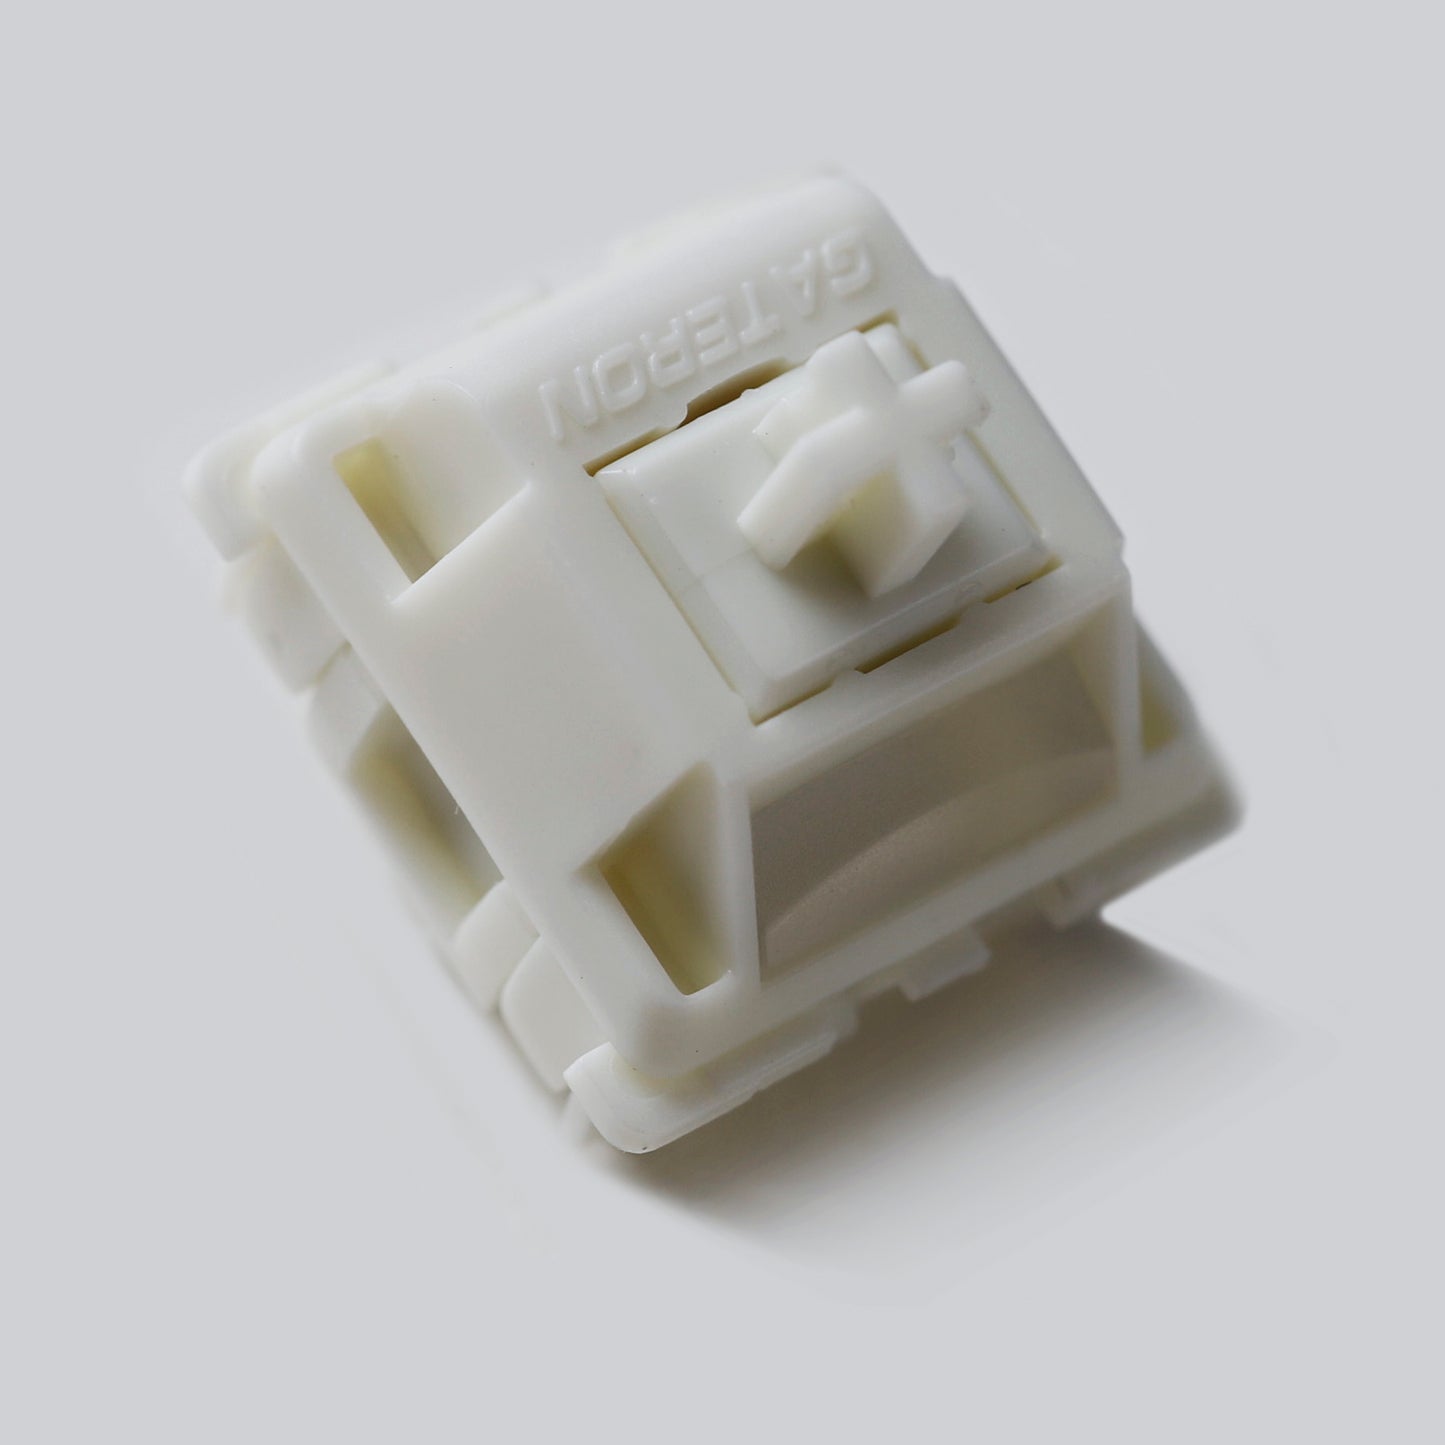 GATERON 5 Pin Linear POM Housing Stem RGB SMD DIY Hotswap Milkshake Smoothie Switches for Mechanical Keyboard